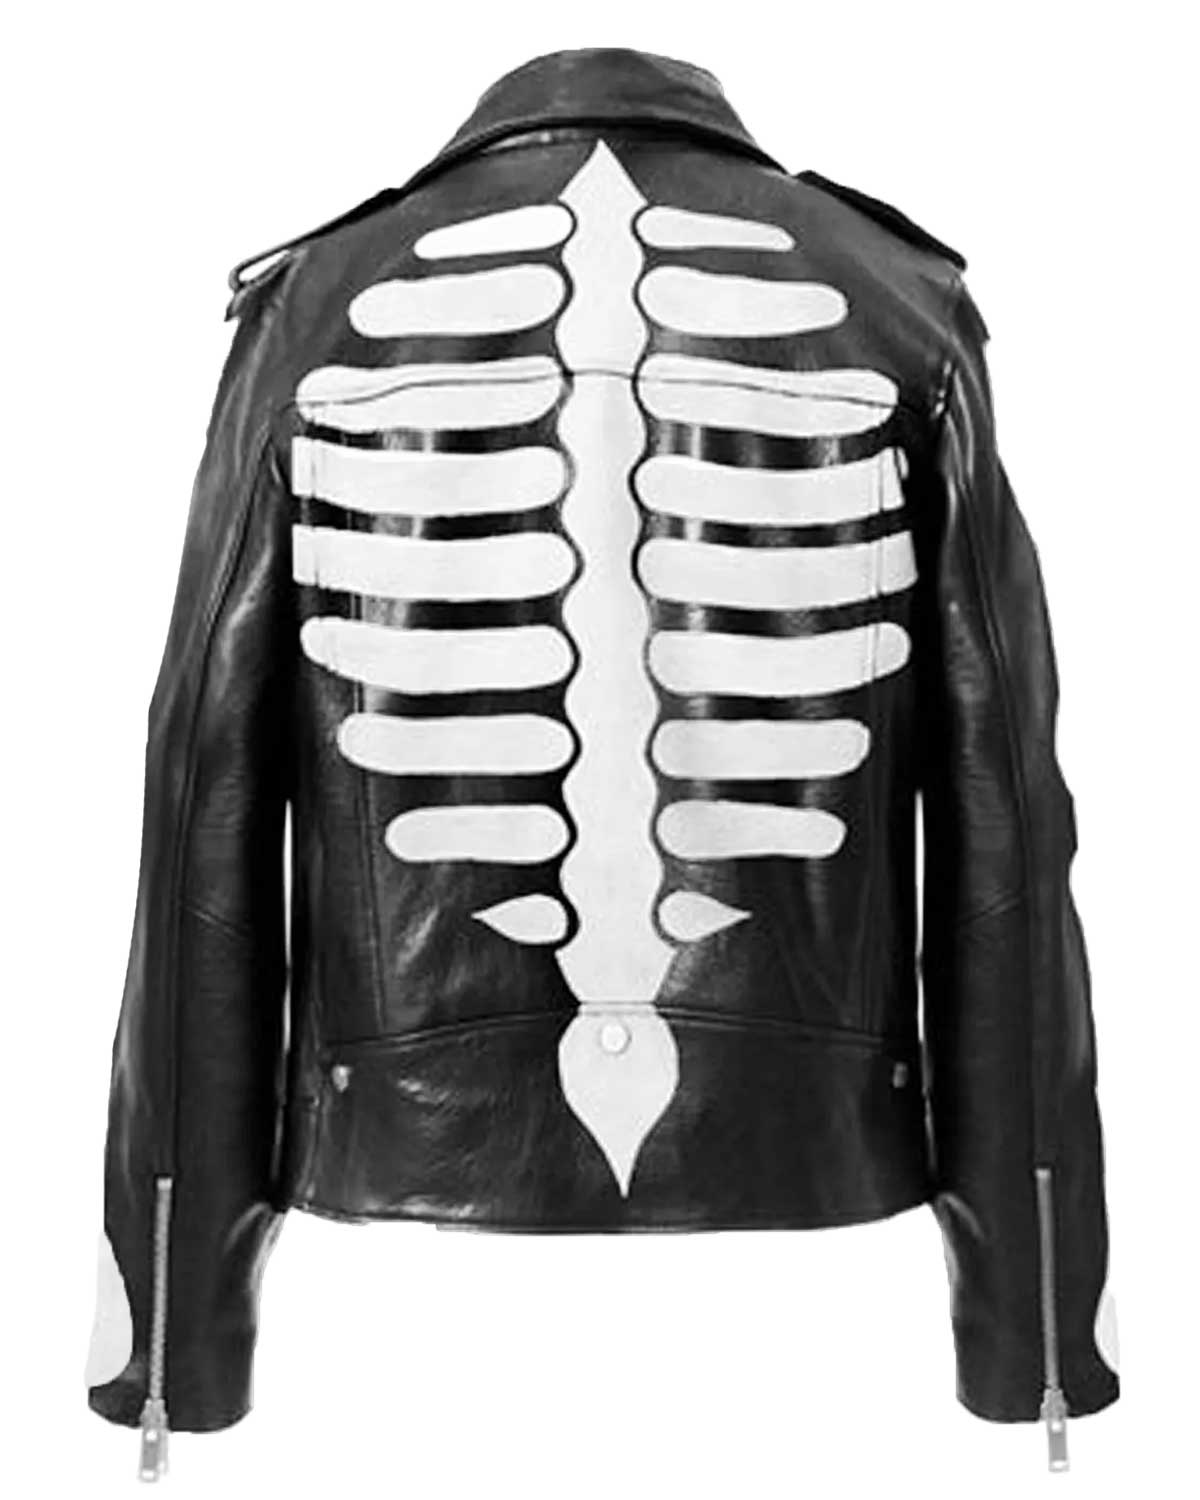 Axl Rose Guns N Roses Skeleton Black Leather Motorcycle Jacket